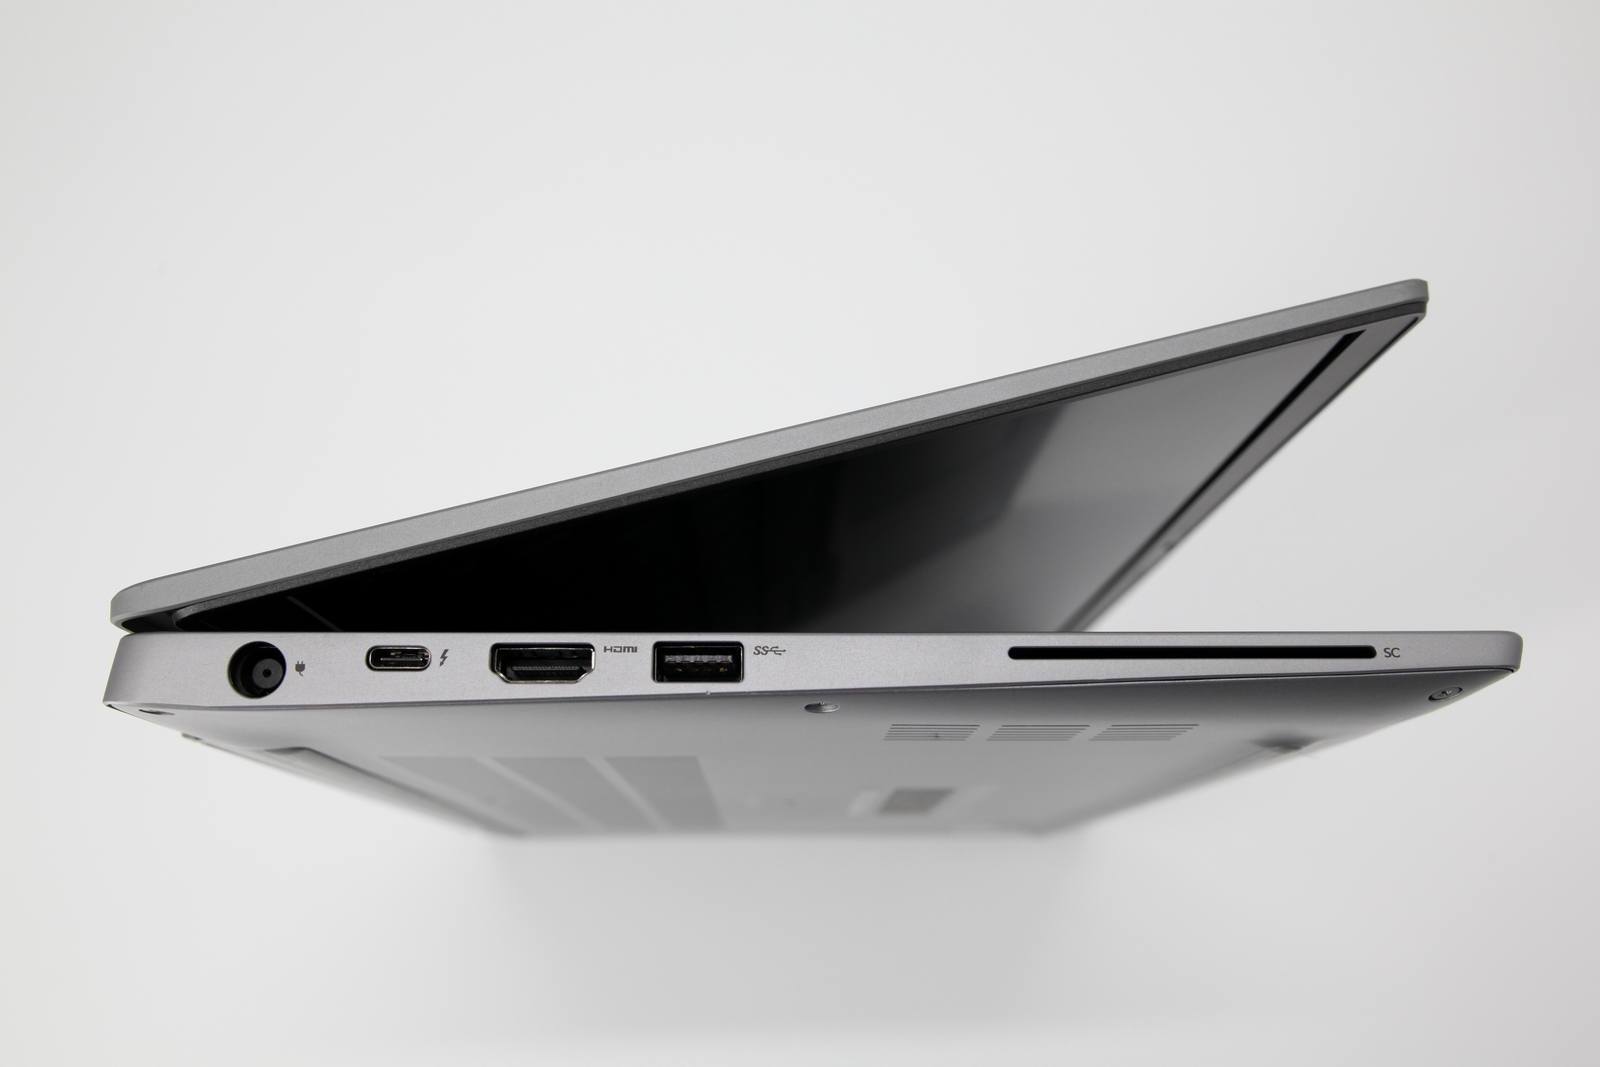 Dell Latitude 7400 Laptop: Core i7 8th Gen, 512GB SSD, 16GB RAM - CruiseTech